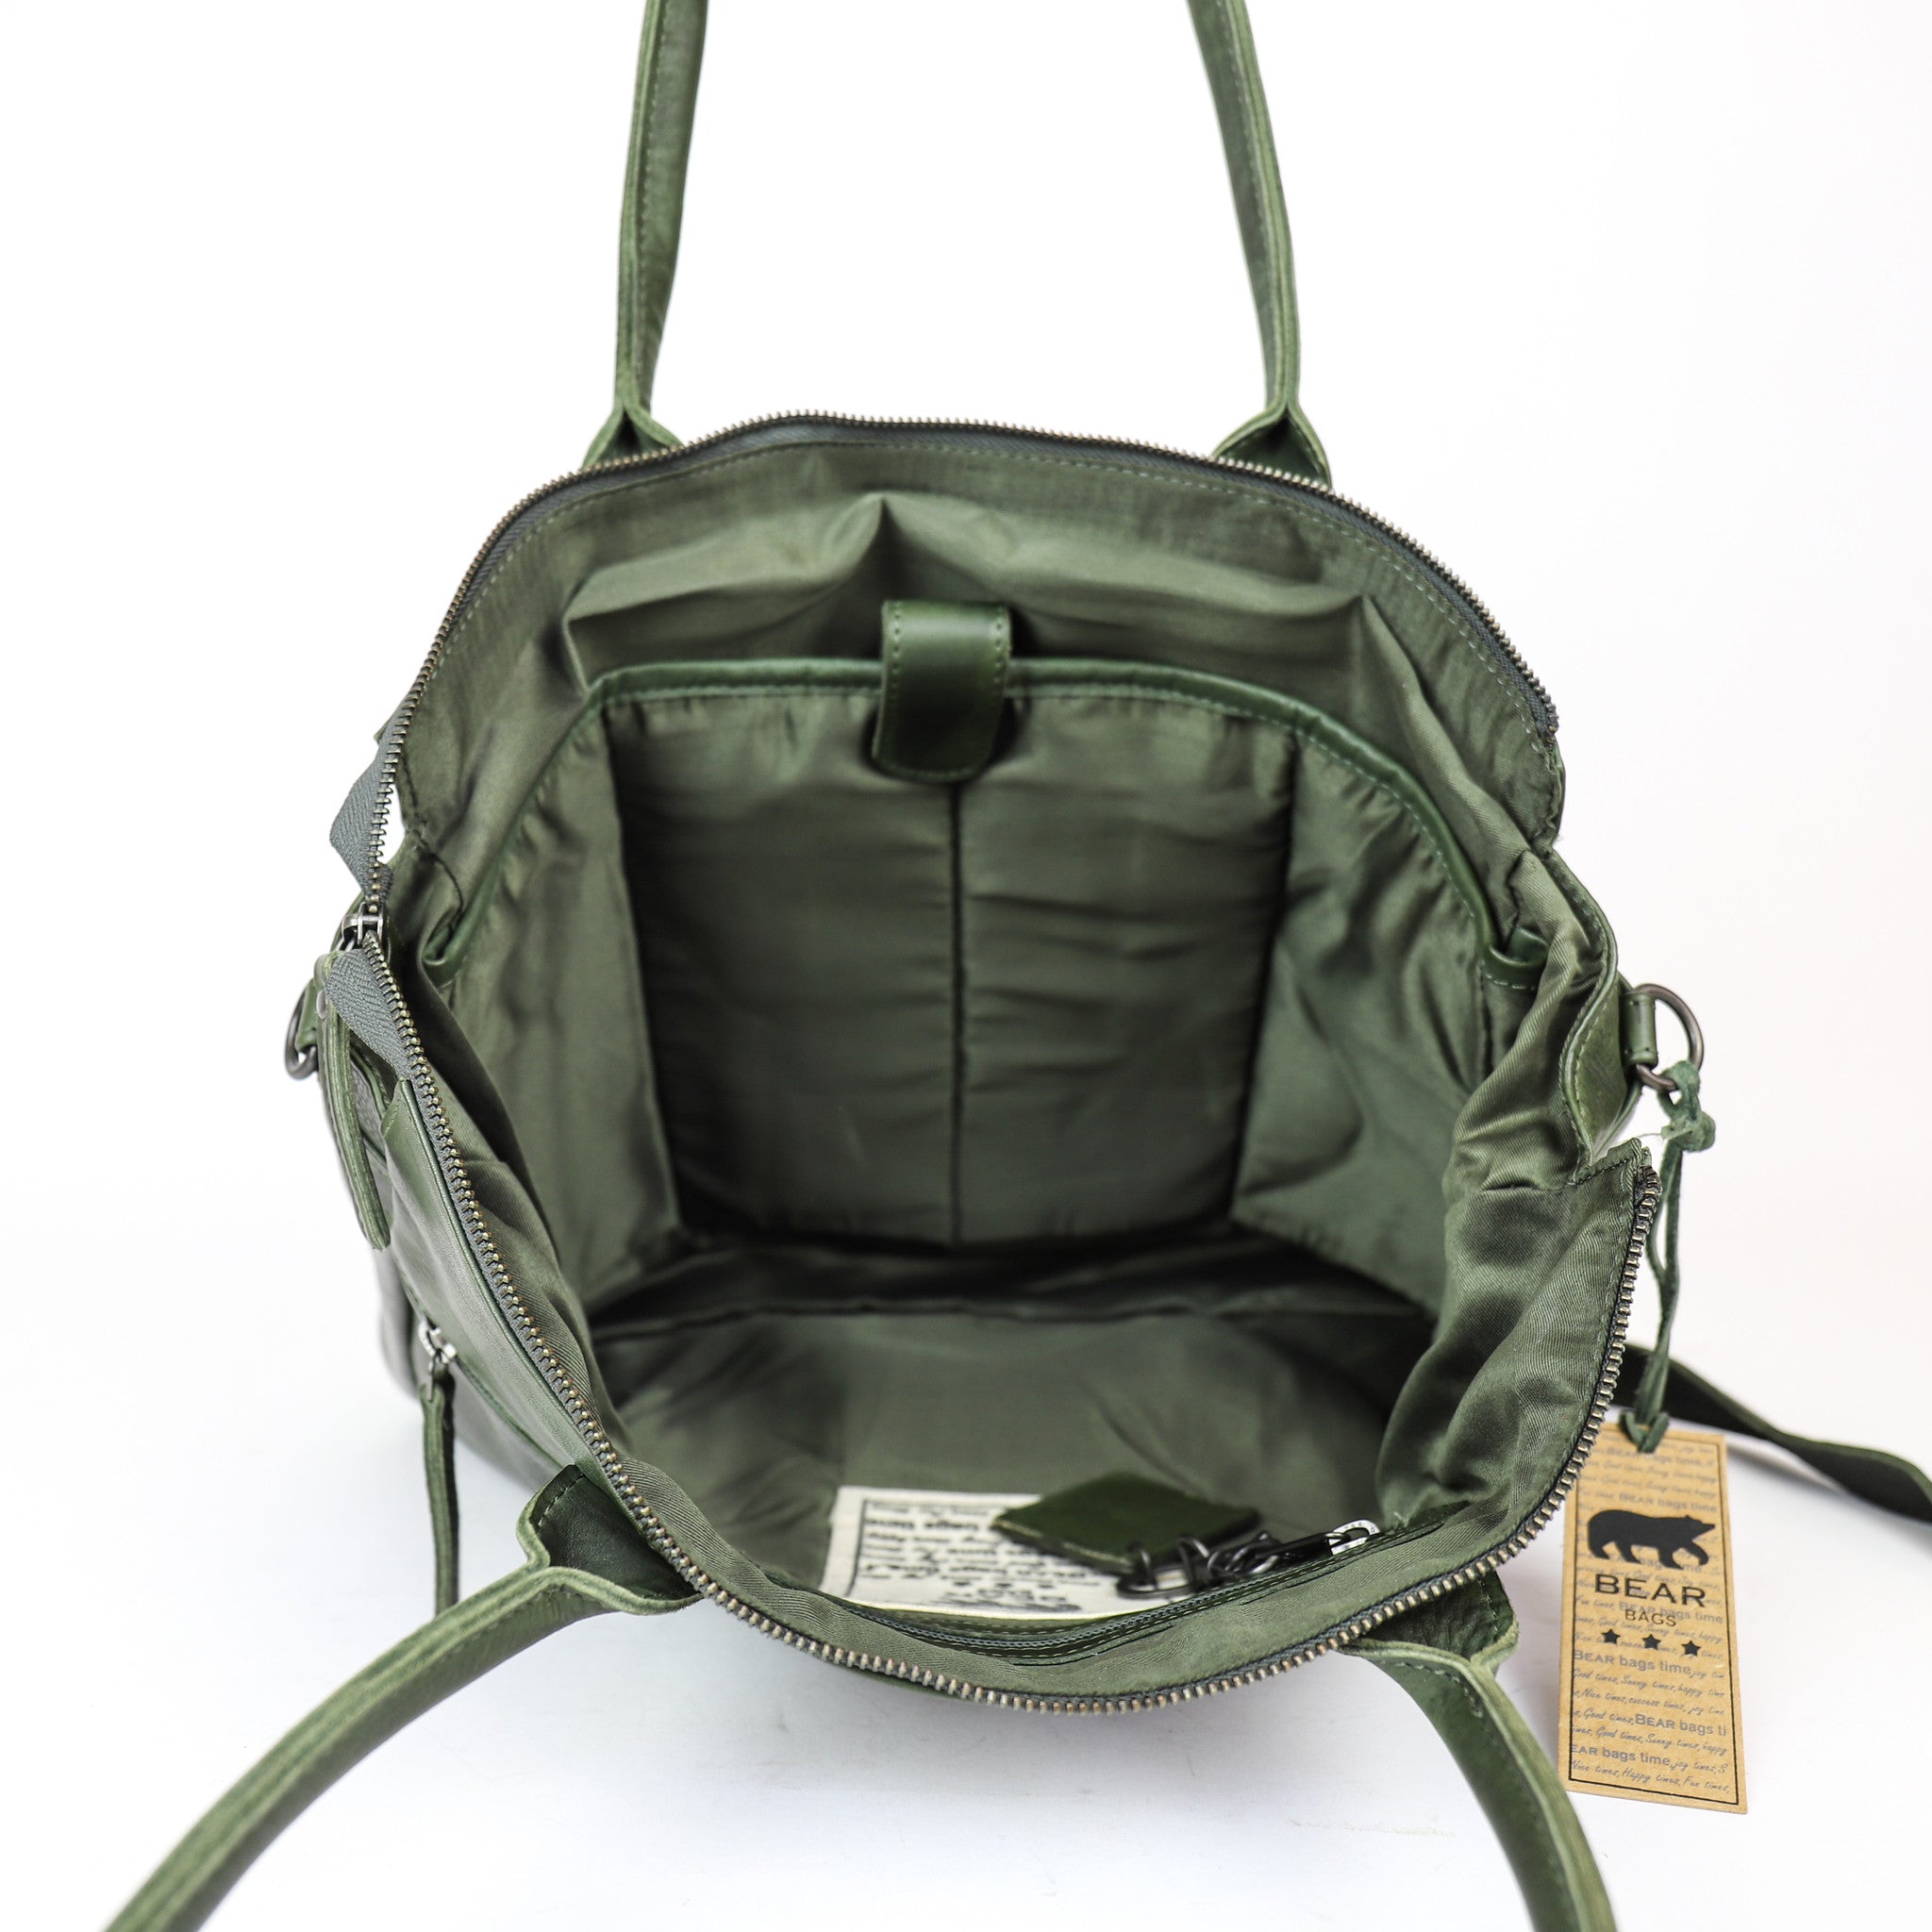 Hand/shoulder bag 'Binni' green - CP 1657